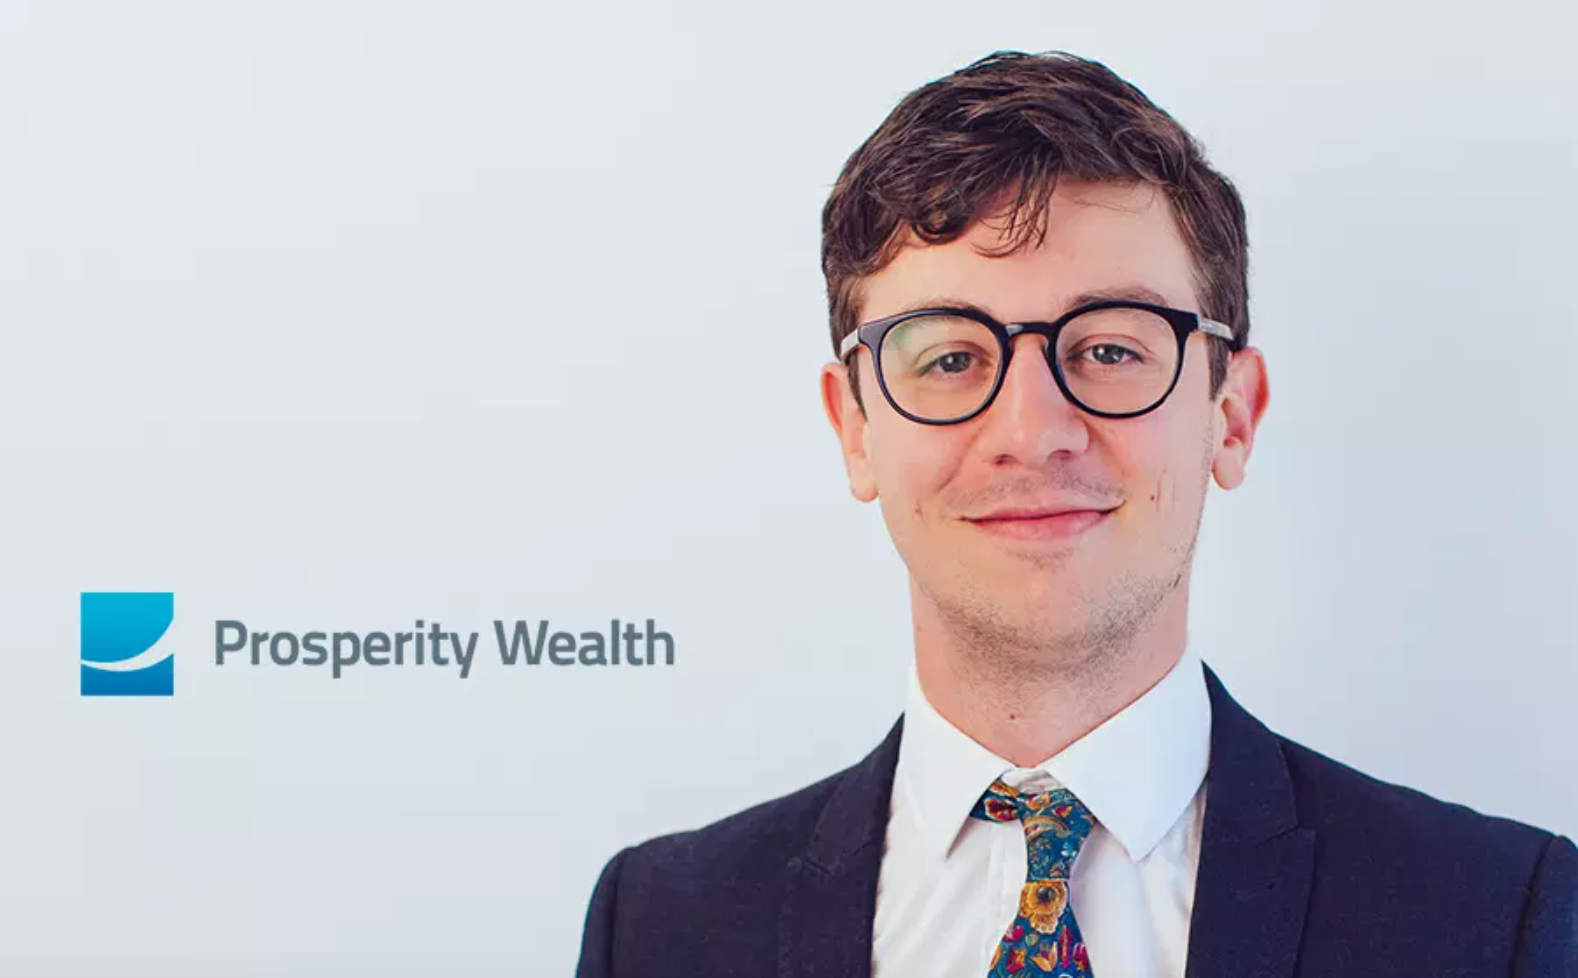 My Prosperity Experience – Nick Adamthwaite